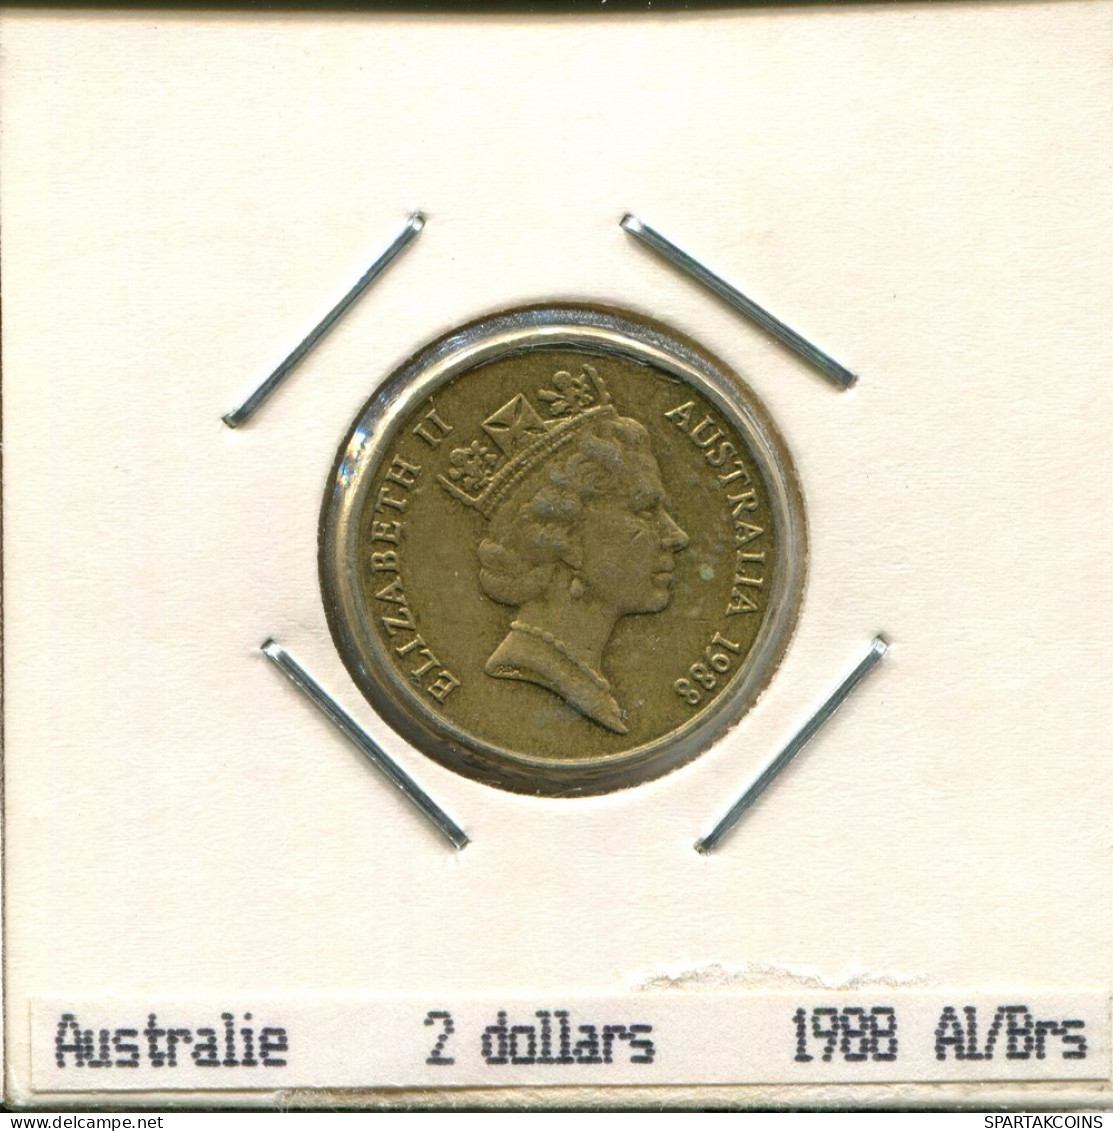 1 DOLLAR 1988 AUSTRALIA Coin #AS261.U.A - Dollar